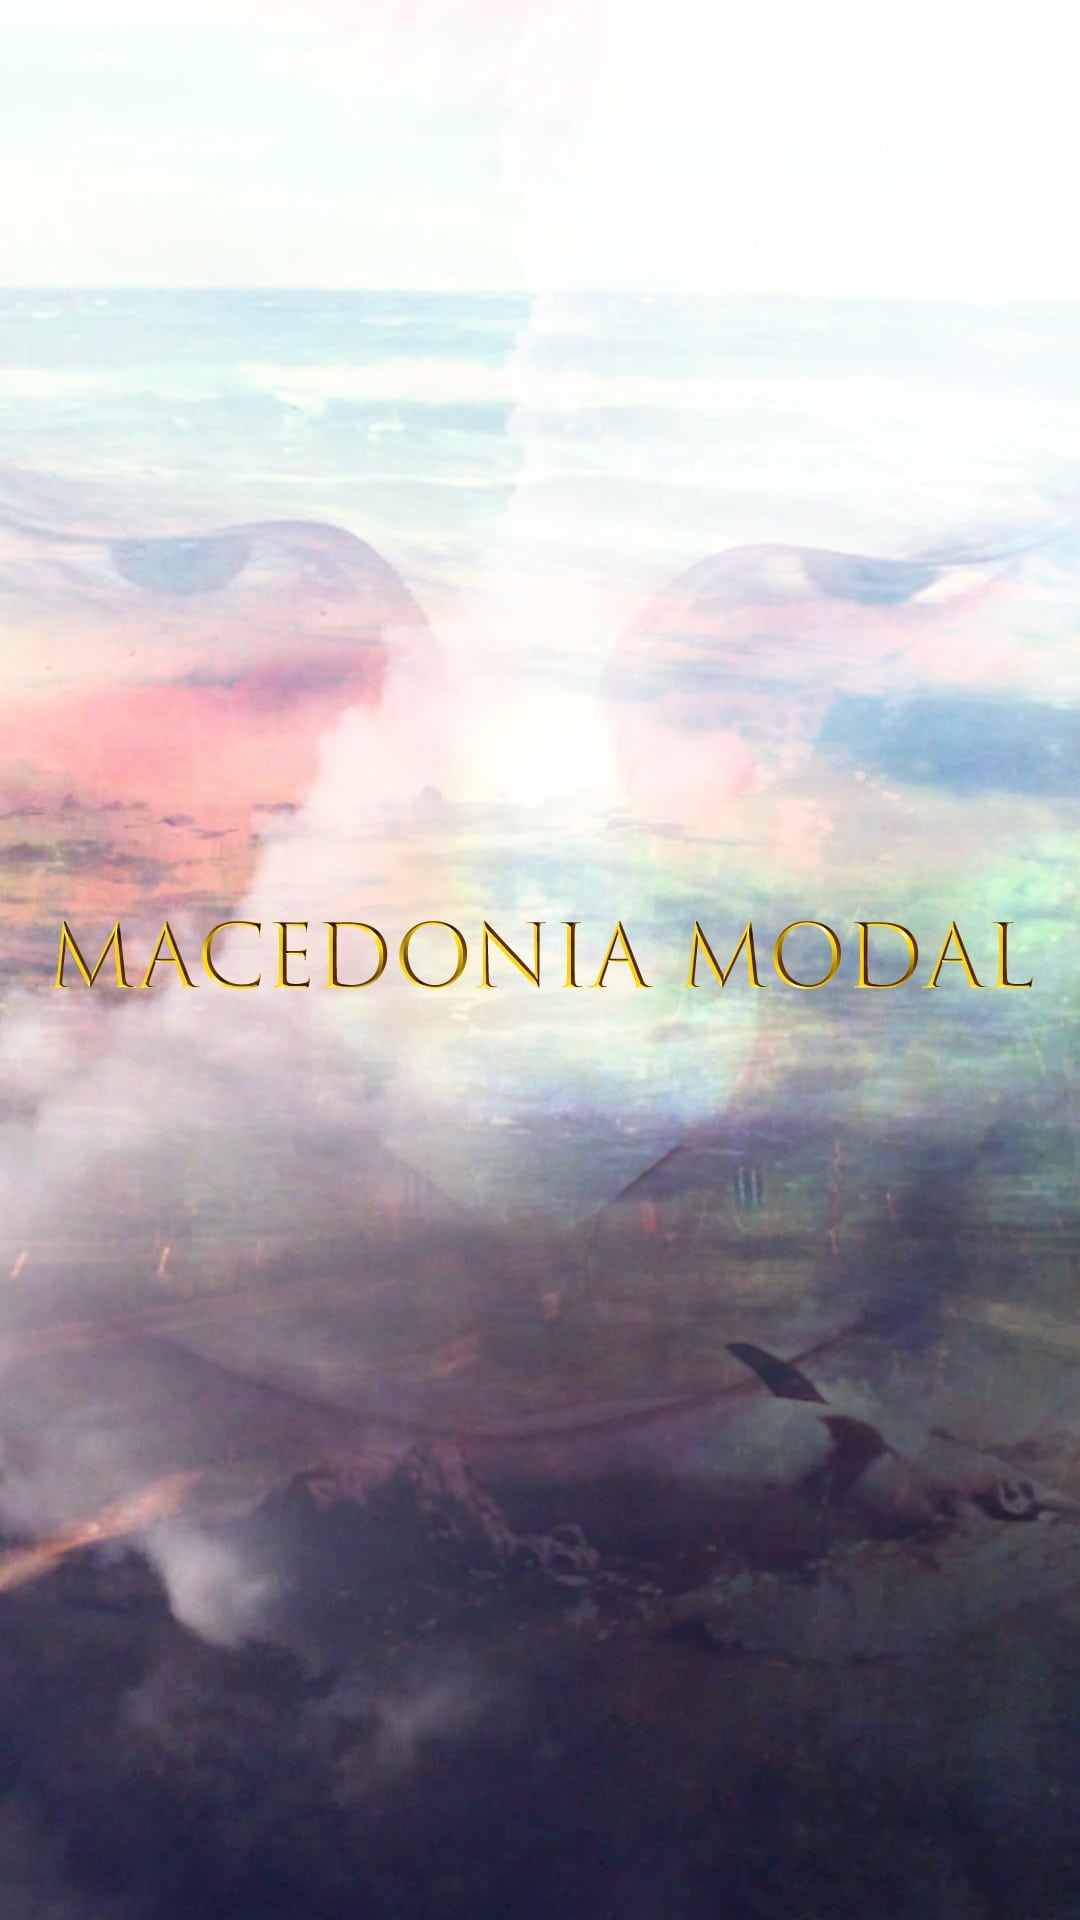 Macedonia modal